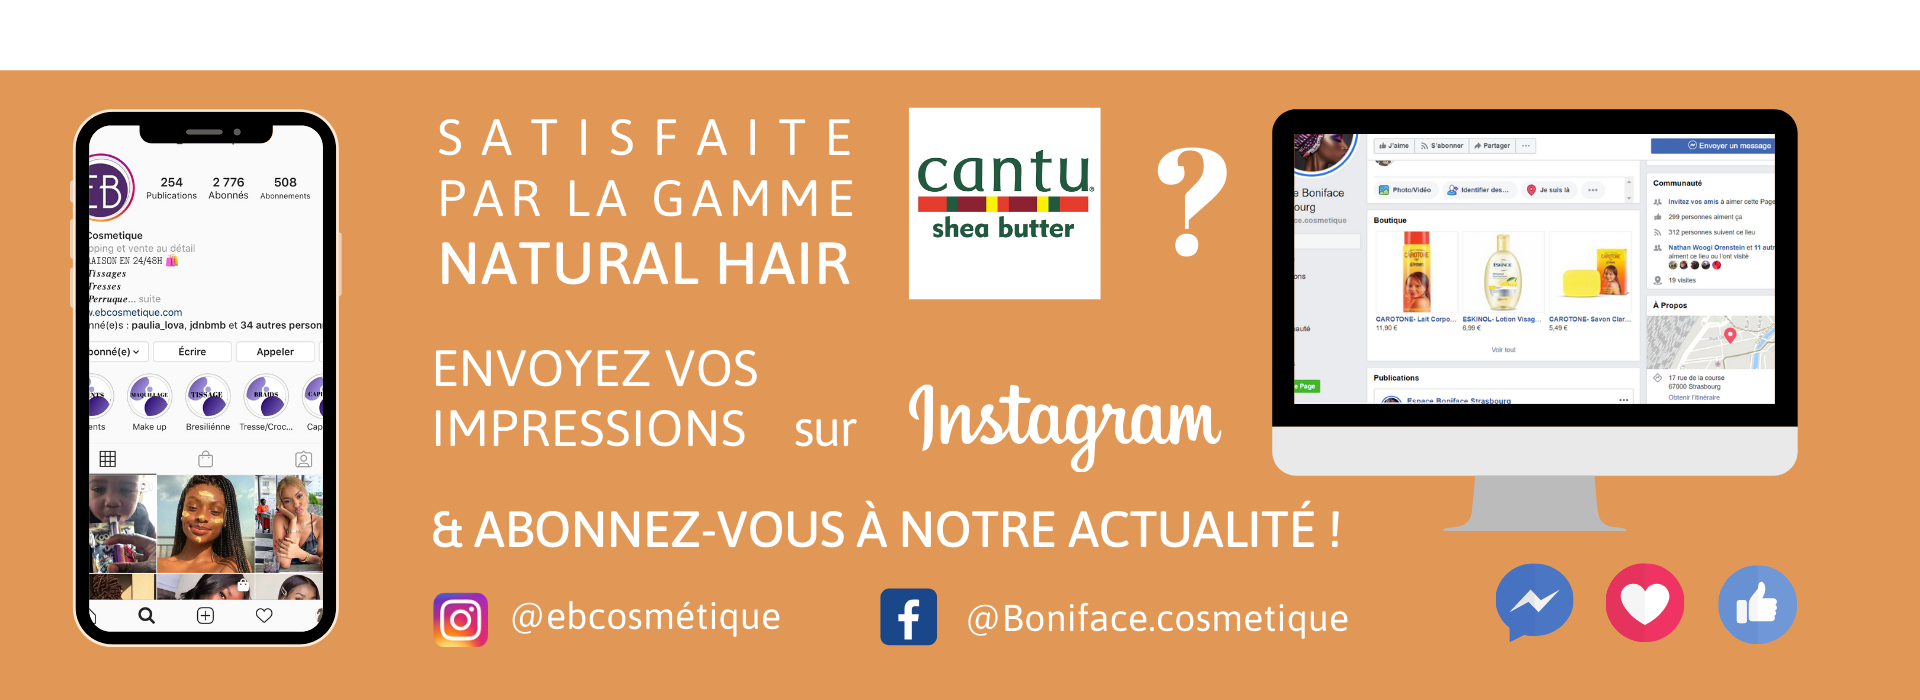 fiche produit ebcosmetique cantu shea butter natural hair hair dressing pomade routine capillaire afro bouclé facebook instagram